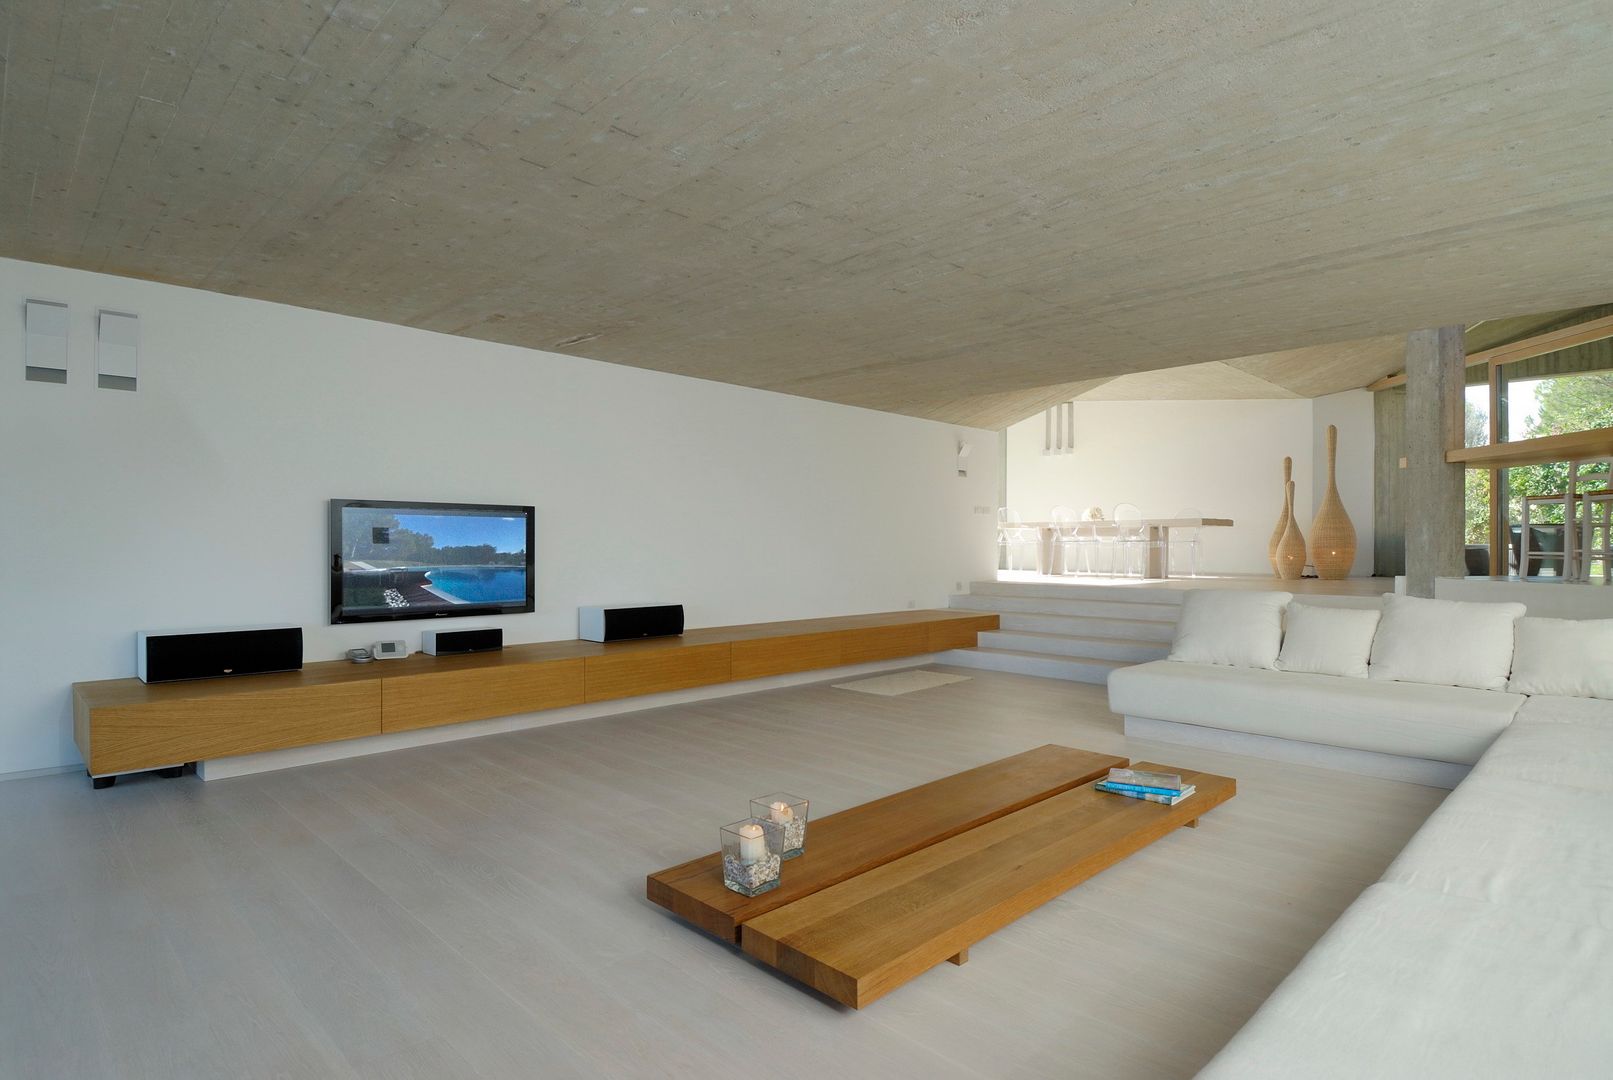 Villa "O" - Portisco, Sardegna, Studio Marastoni Studio Marastoni Minimalist living room TV stands & cabinets